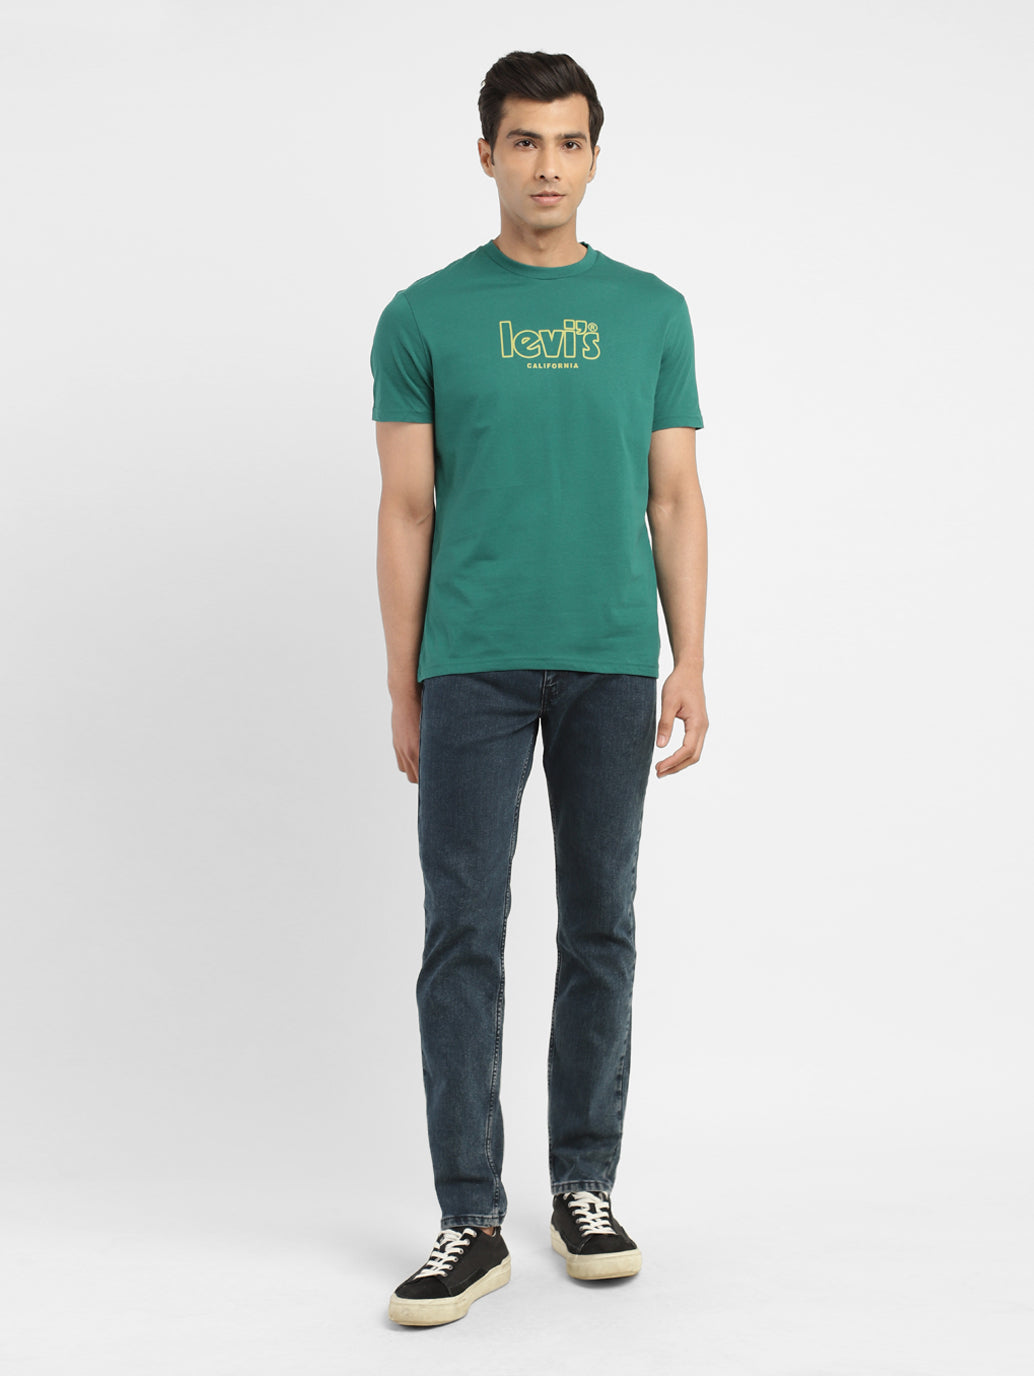 Men's Green Brand Logo Printed Crew Neck T-Shirt